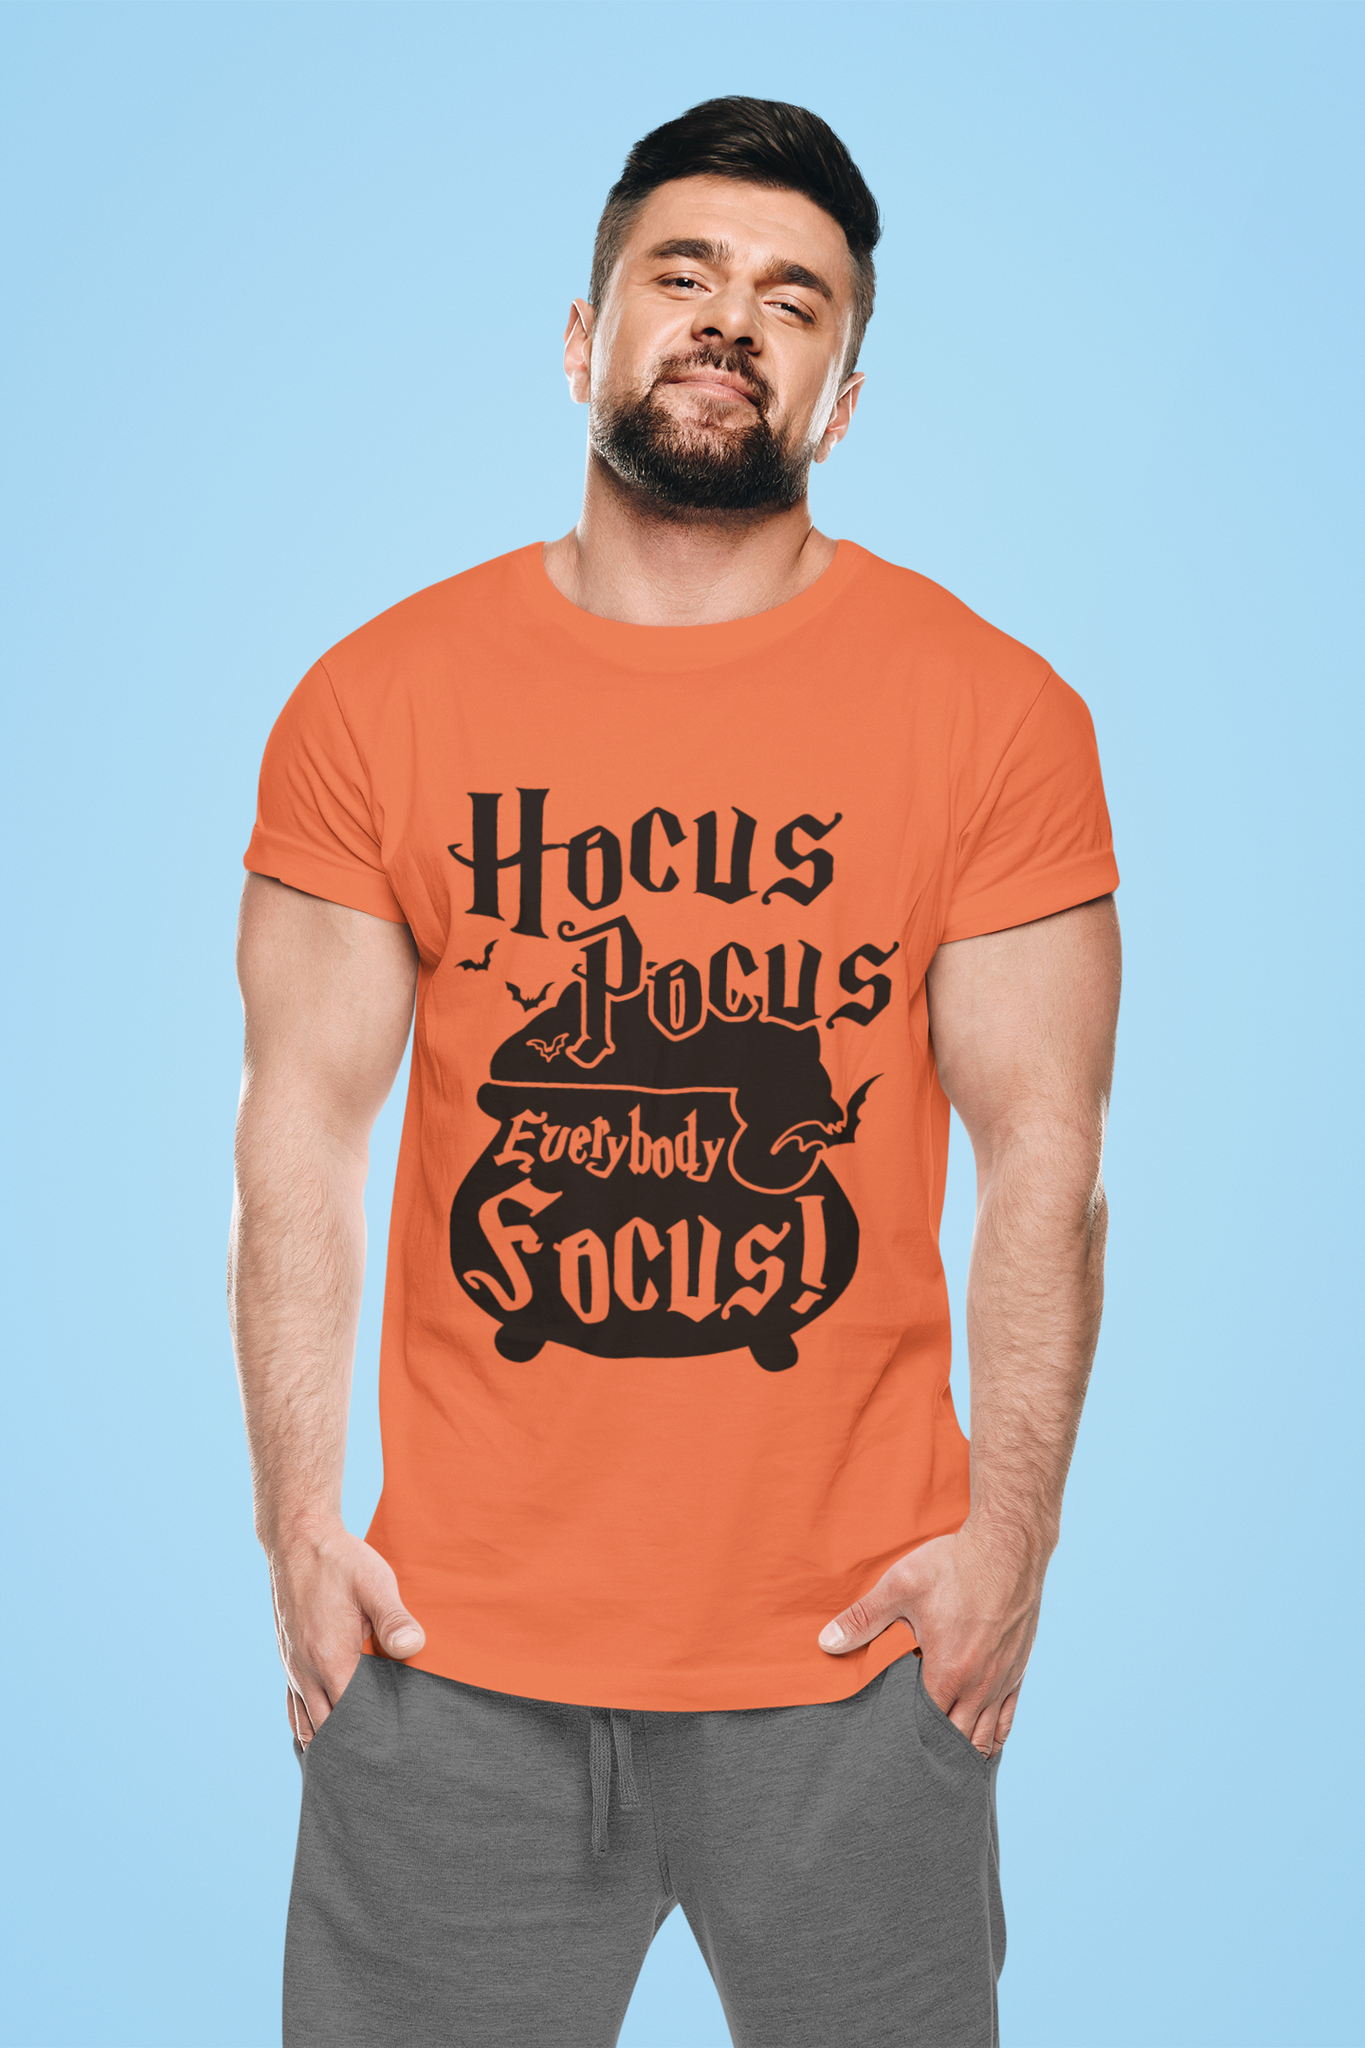 Hocus Pocus T Shirt, Hocus Pocus Everybody Focus Shirt, Halloween Gifts